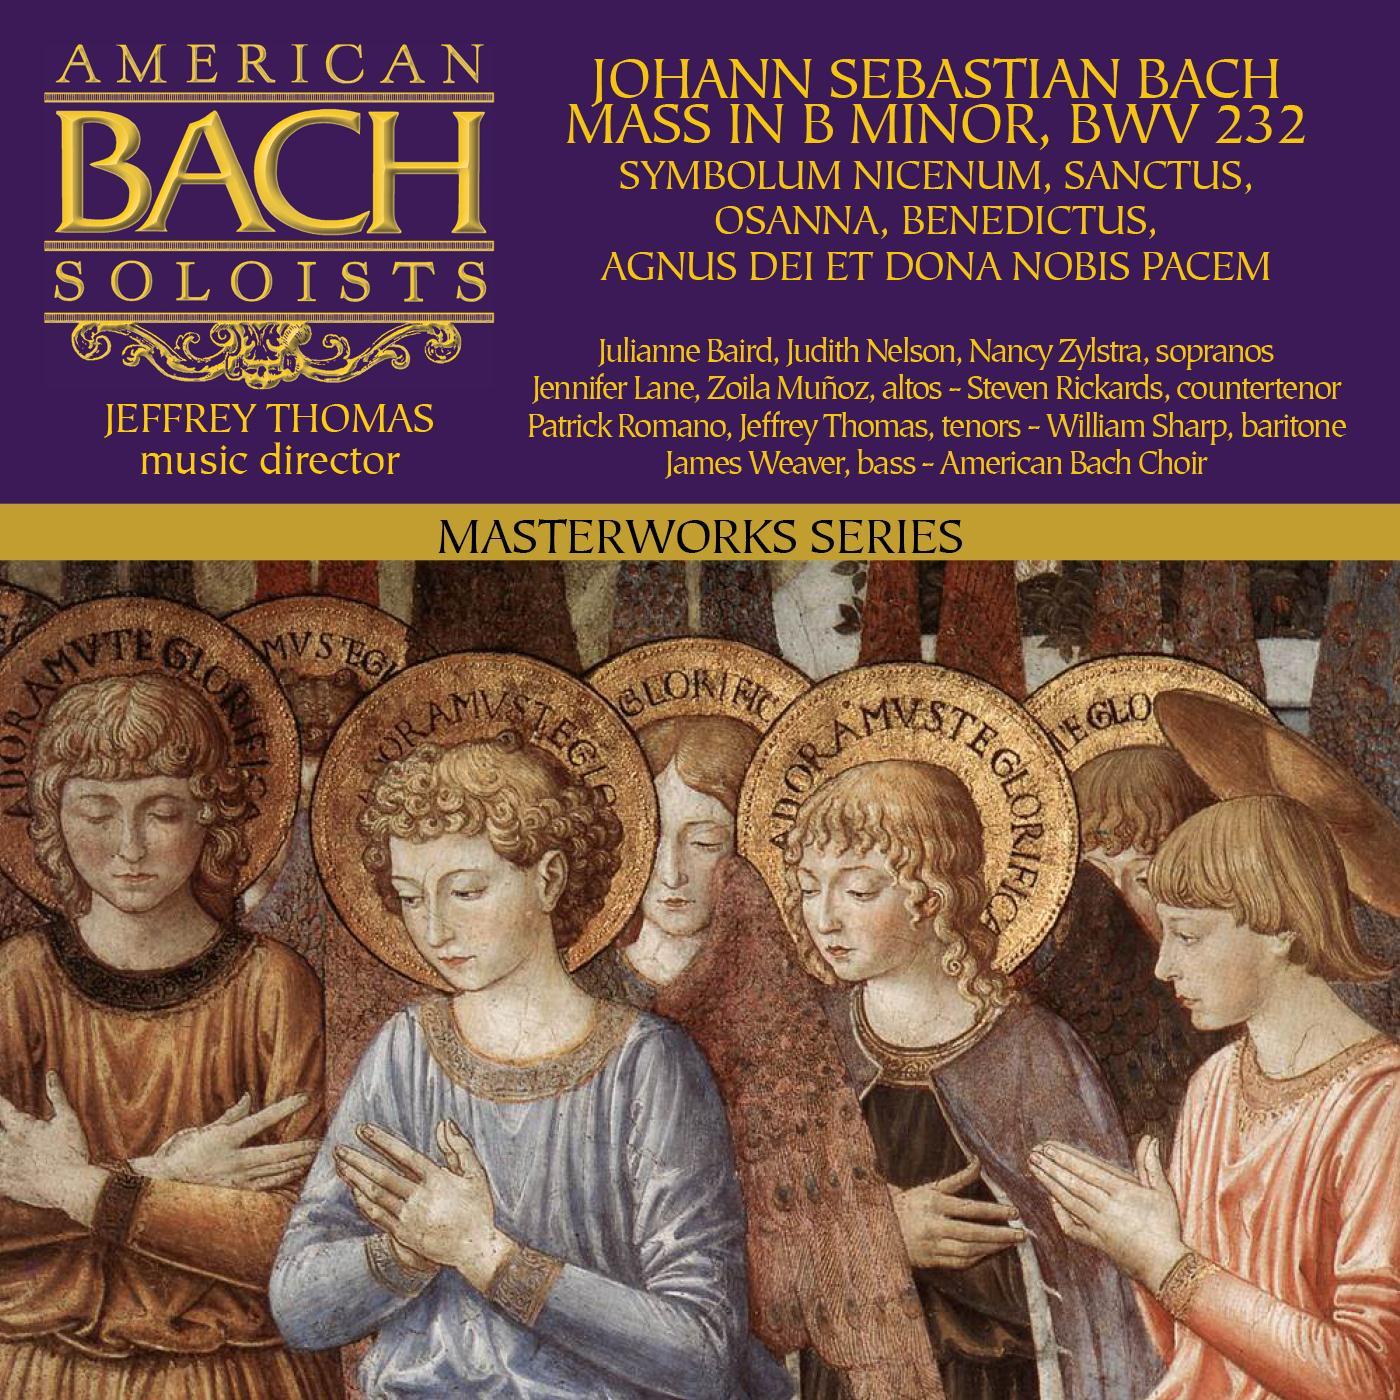 Mass in B Minor, BWV 232 Chorus: Credo in unum Deum